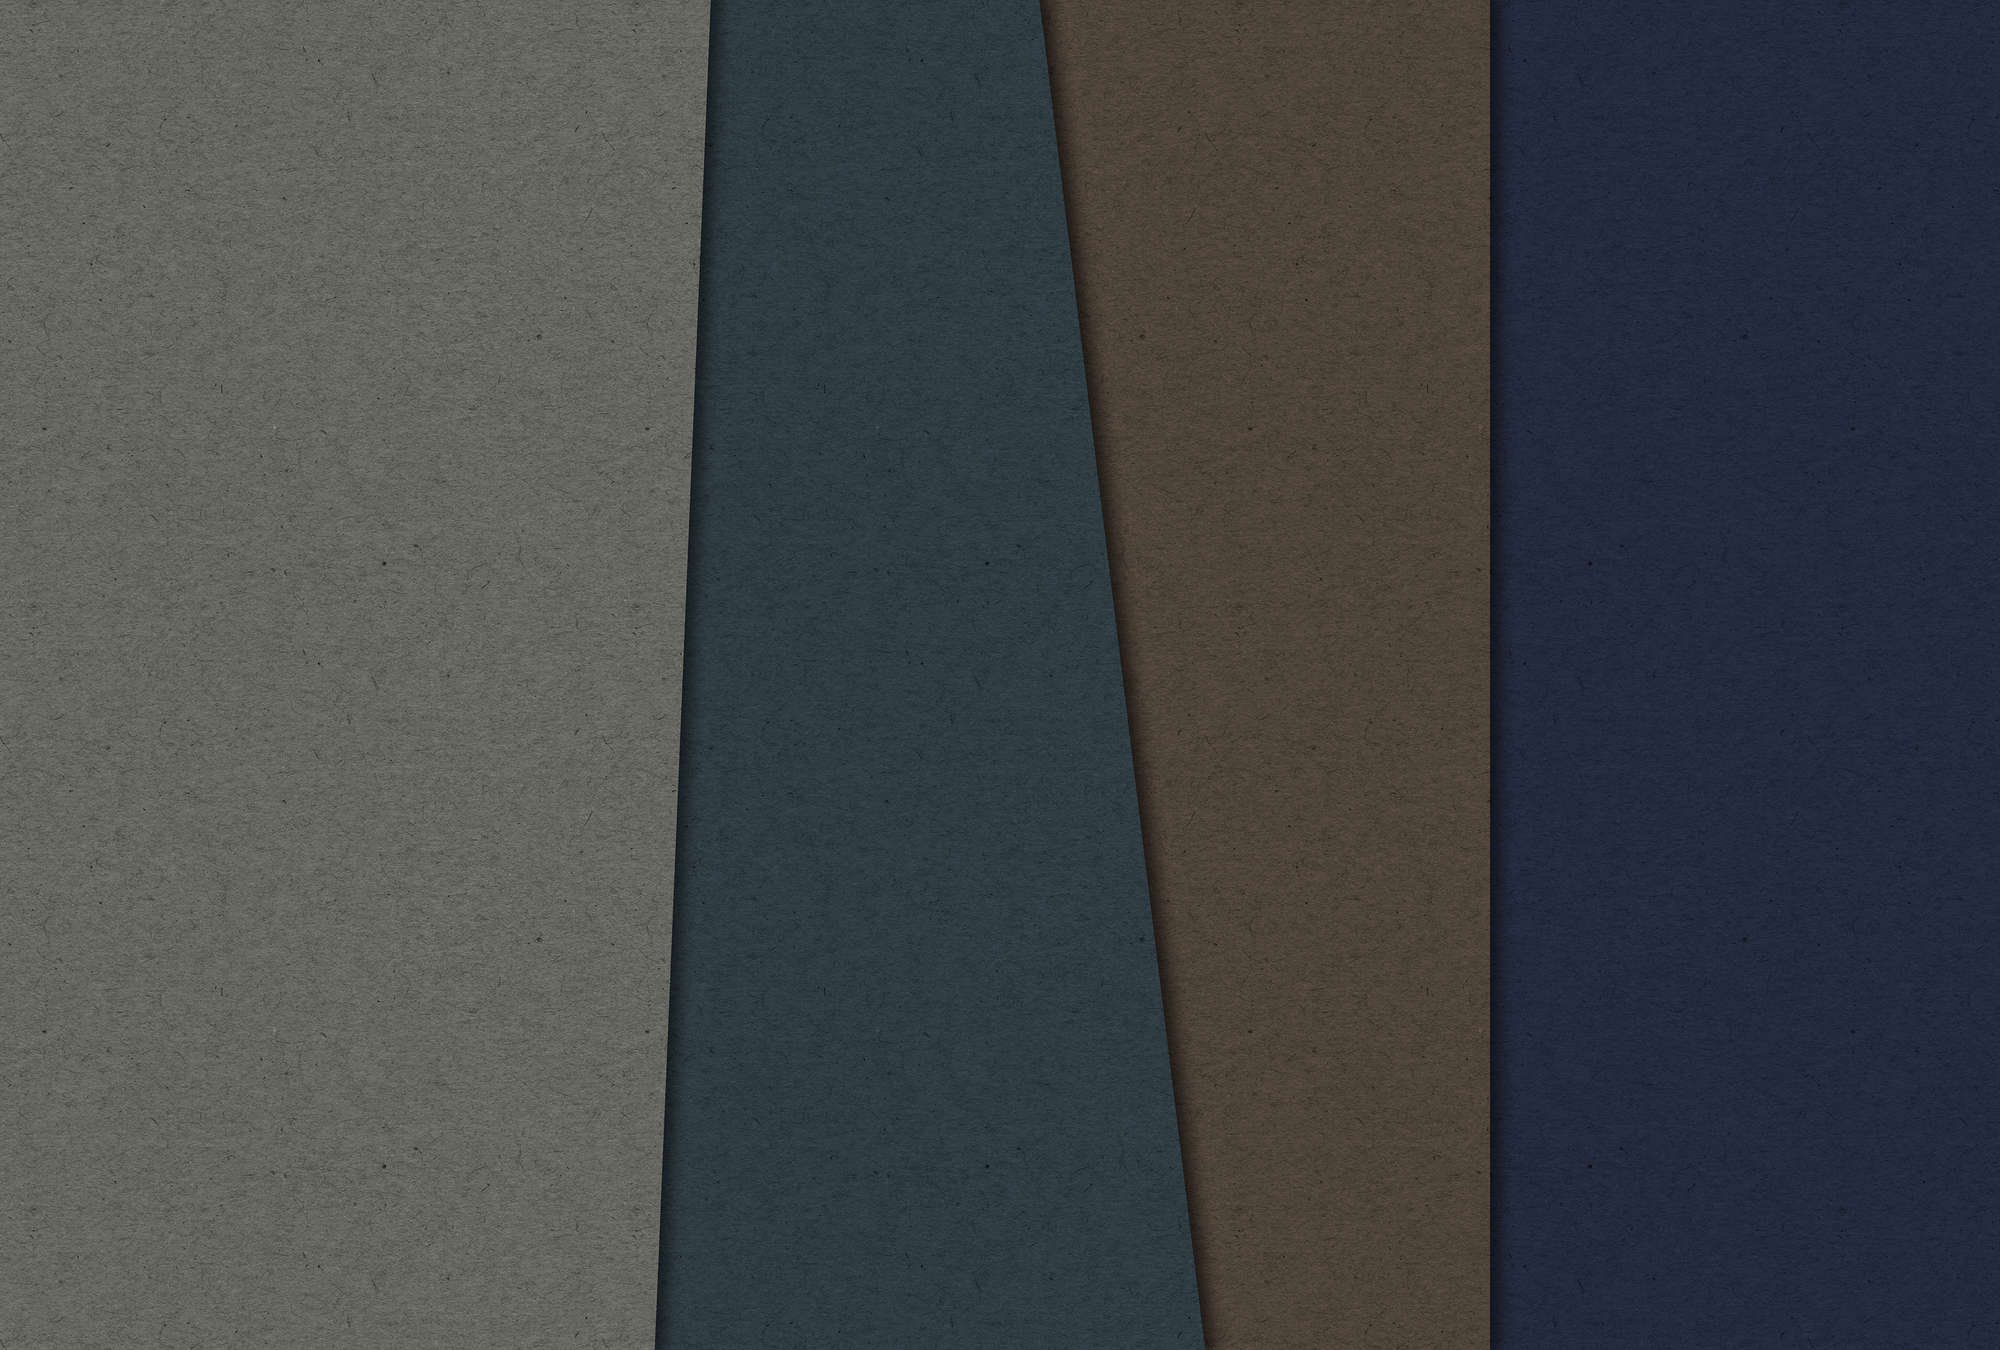             Layered Cardboard 2 - Photo wallpaper in cardboard structure with dark colour fields - Blue, Brown | Premium smooth fleece
        